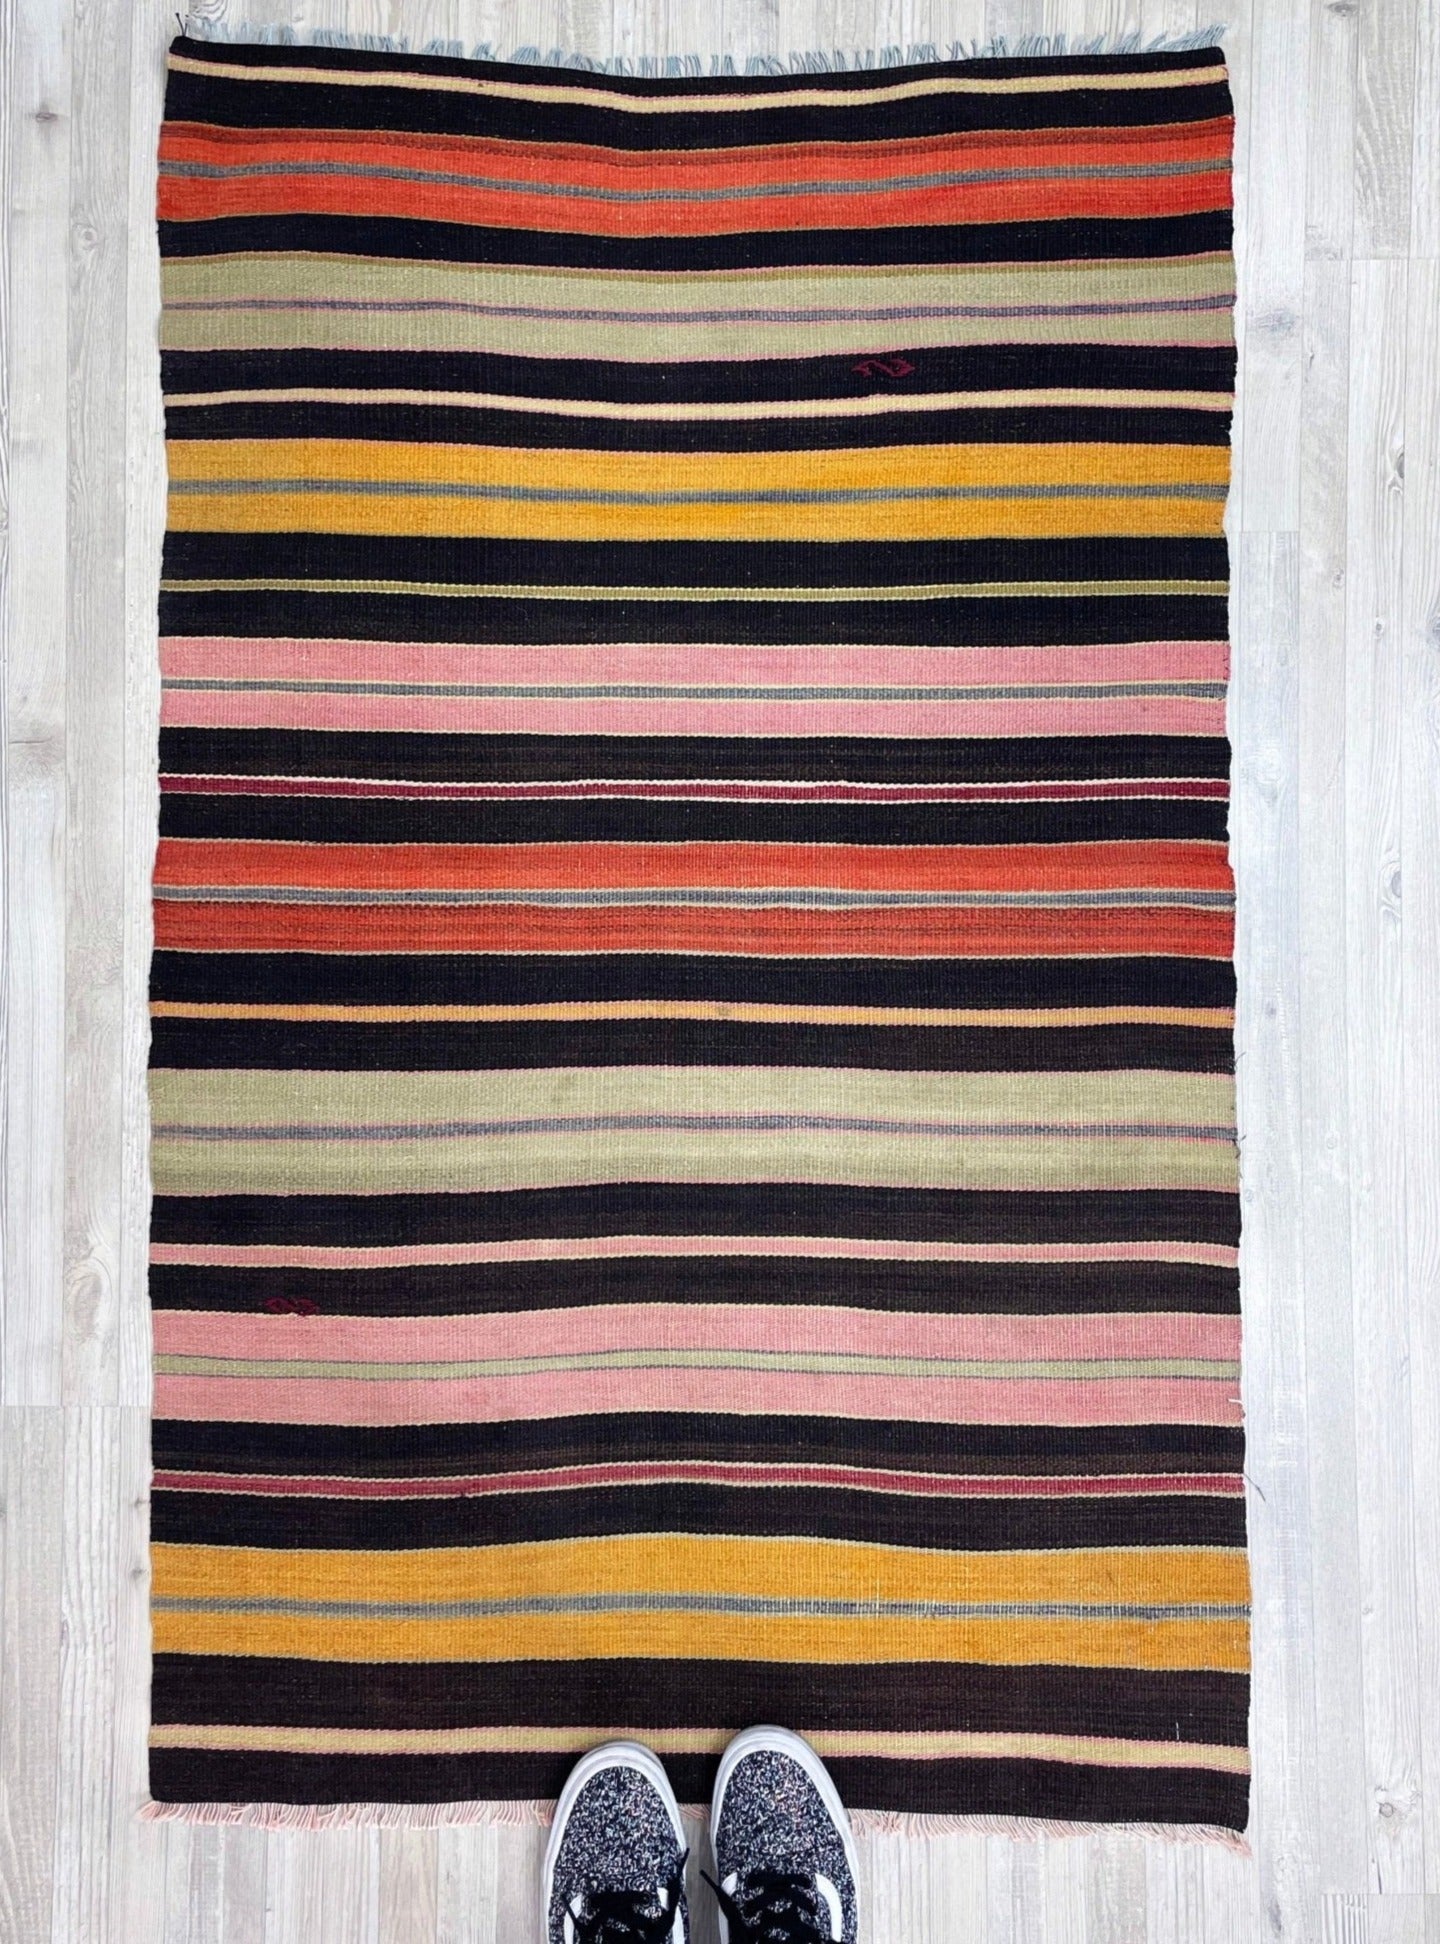 turkish kilim rug shopping online rug store door mat bathmat san francsco bay area palo alto california berkeley